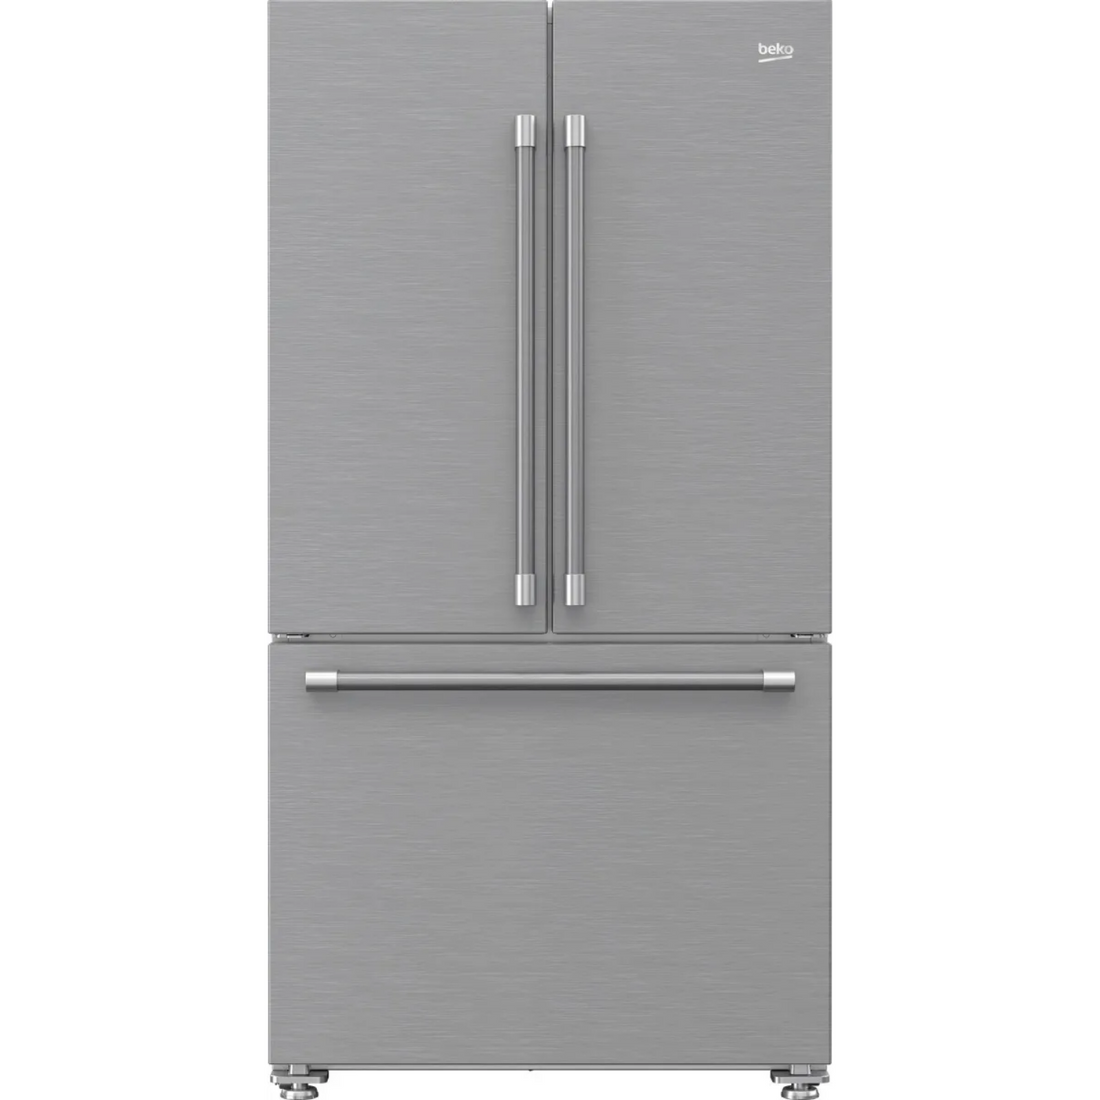 Beko 36 in. 20.5 Cu. Ft. Fingerprint-Free Stainless Steel Counter Depth French Door Refrigerator